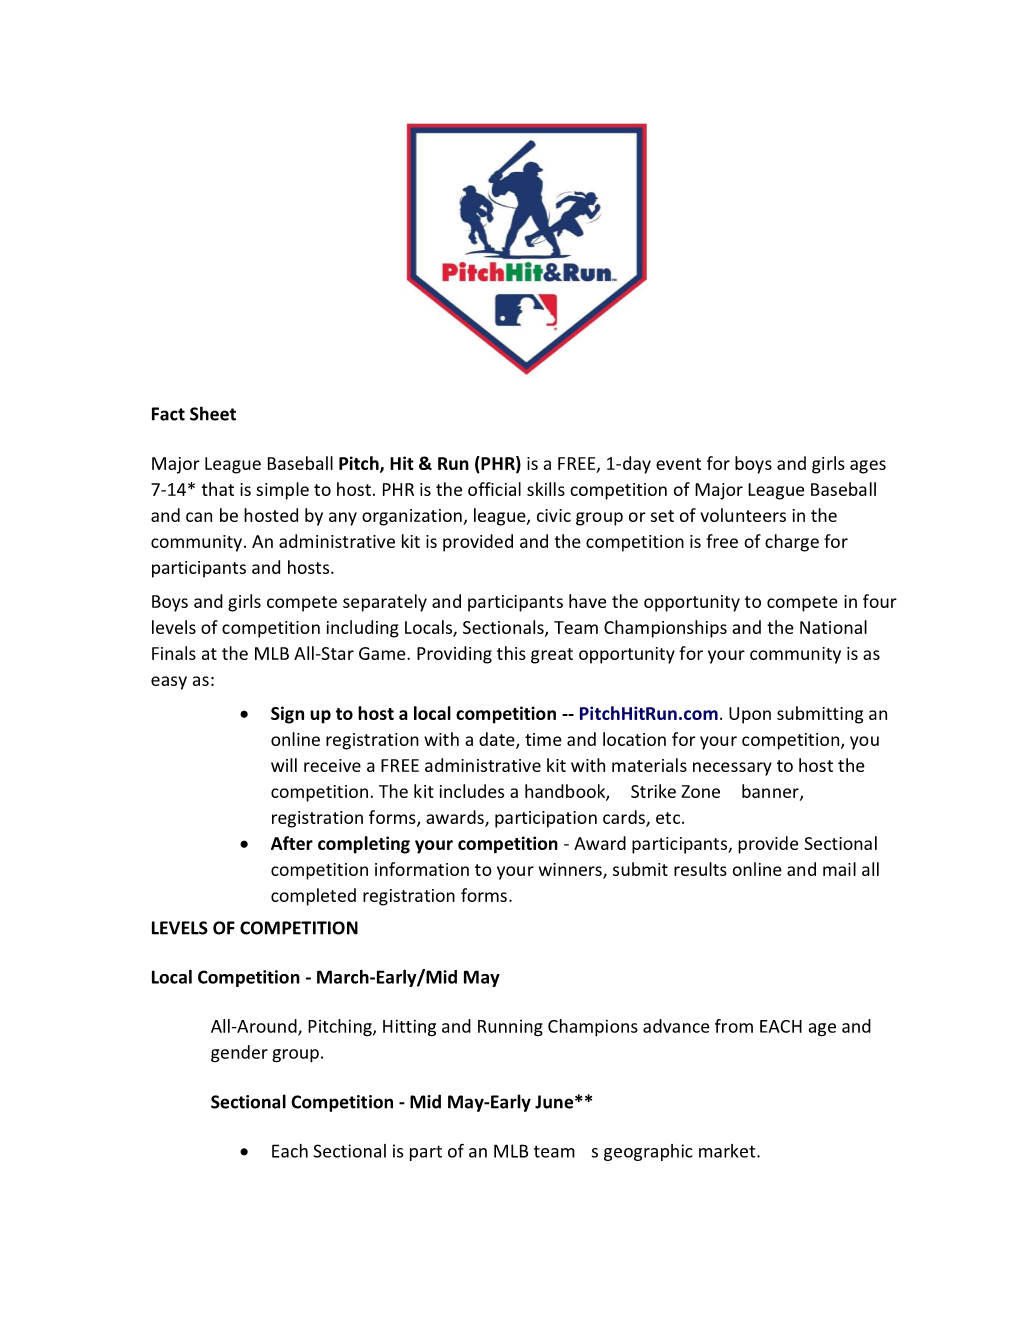 Fact Sheet Major League Baseball Pitch, Hit & Run (PHR) Is a FREE, 1